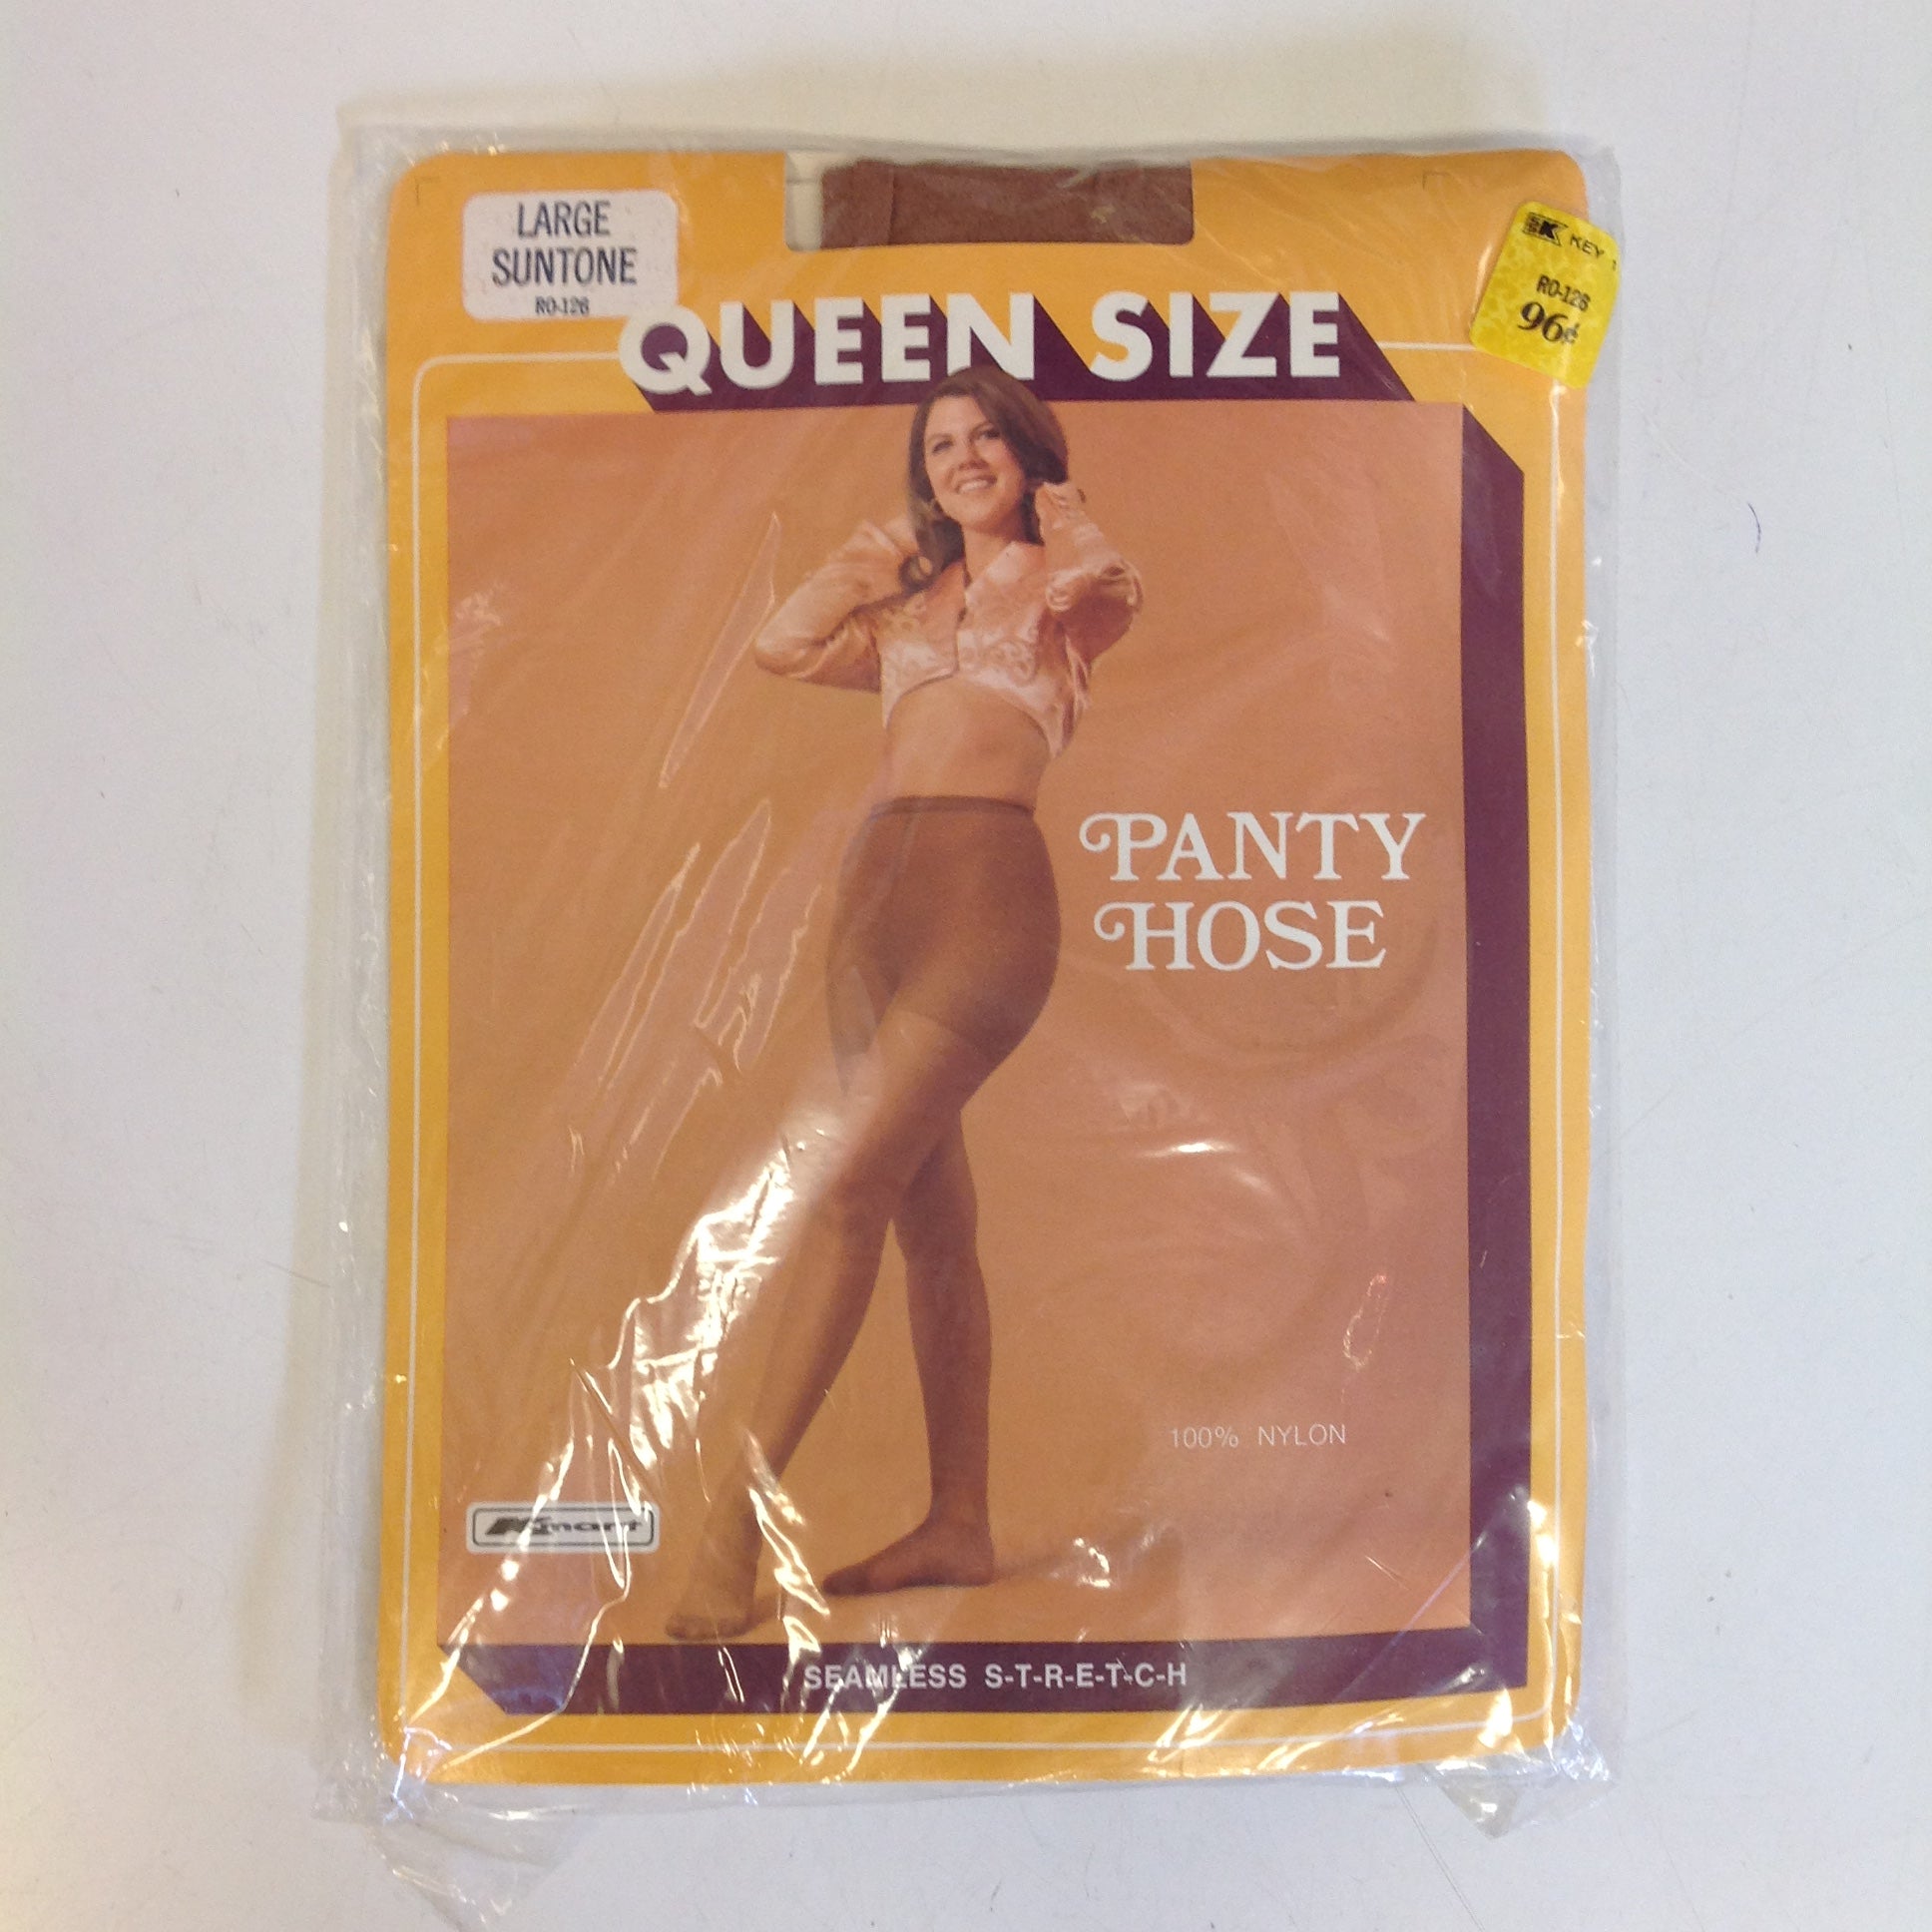 Vintage 1980's NOS K-Mart Queen Size Large Suntone 100% Nylon Pantyhose Seamless Stretch